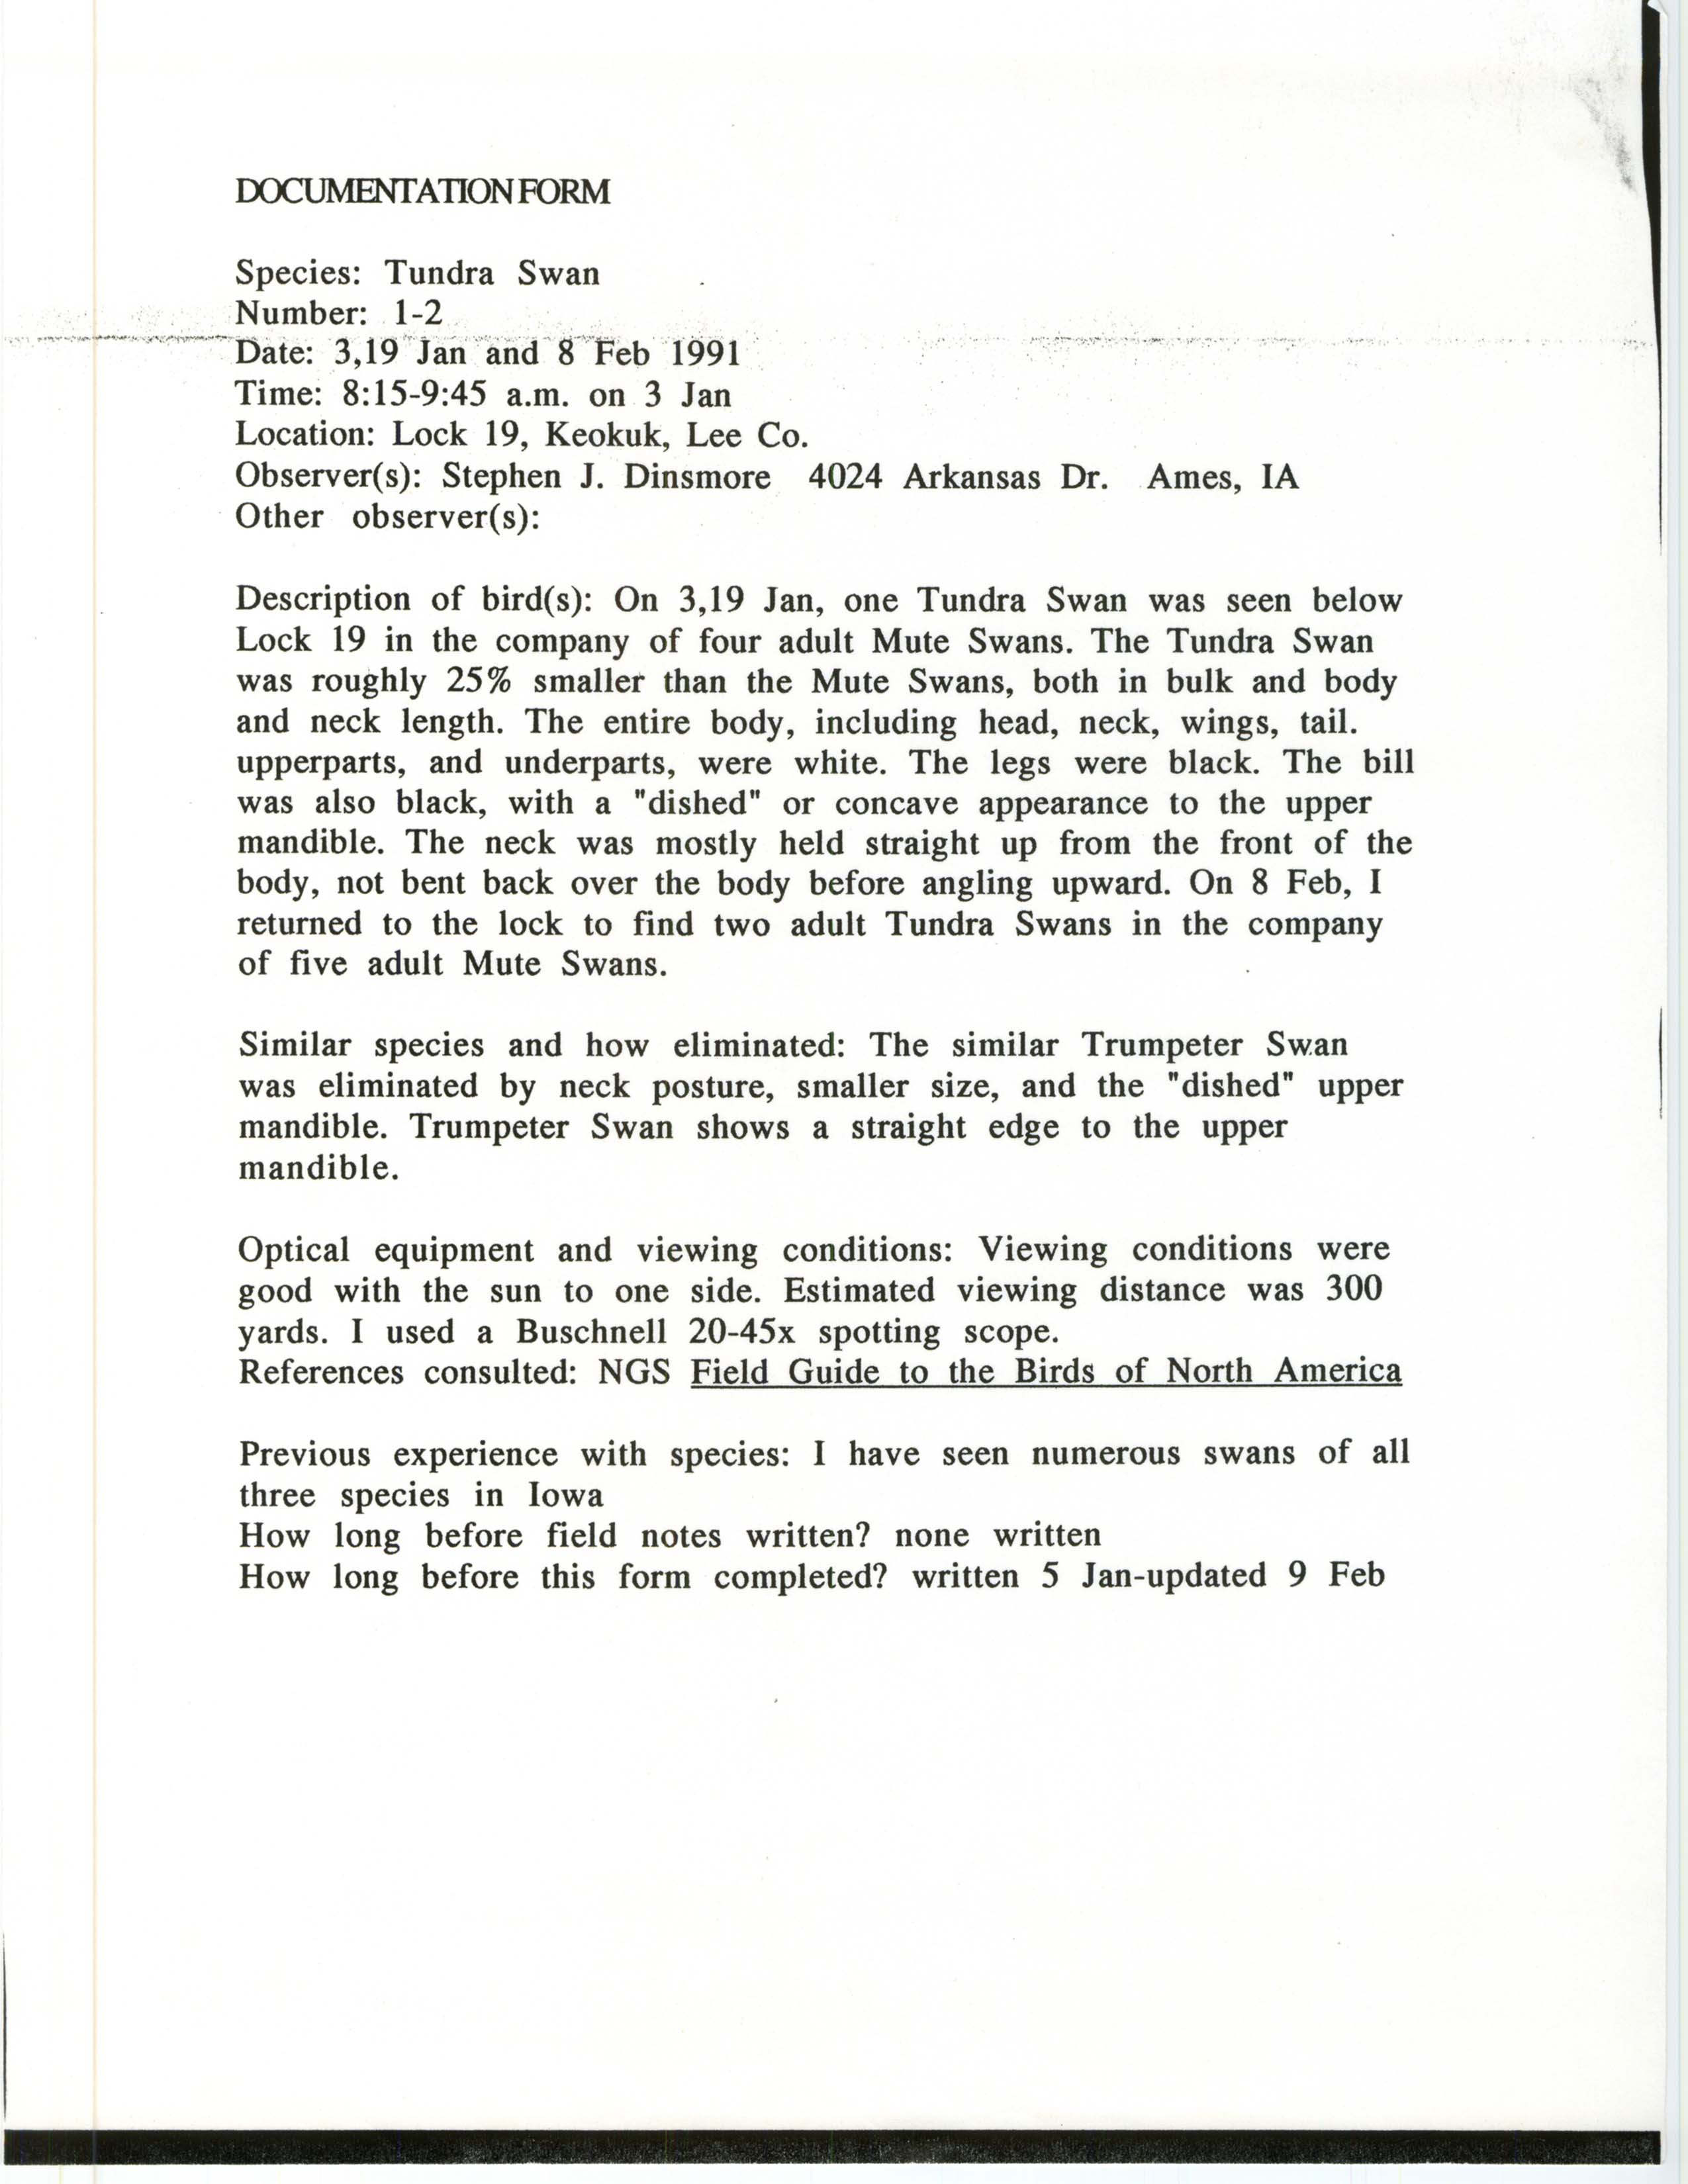 Rare bird documentation form for Tundra Swan at Lock 19 in Keokuk in 1991